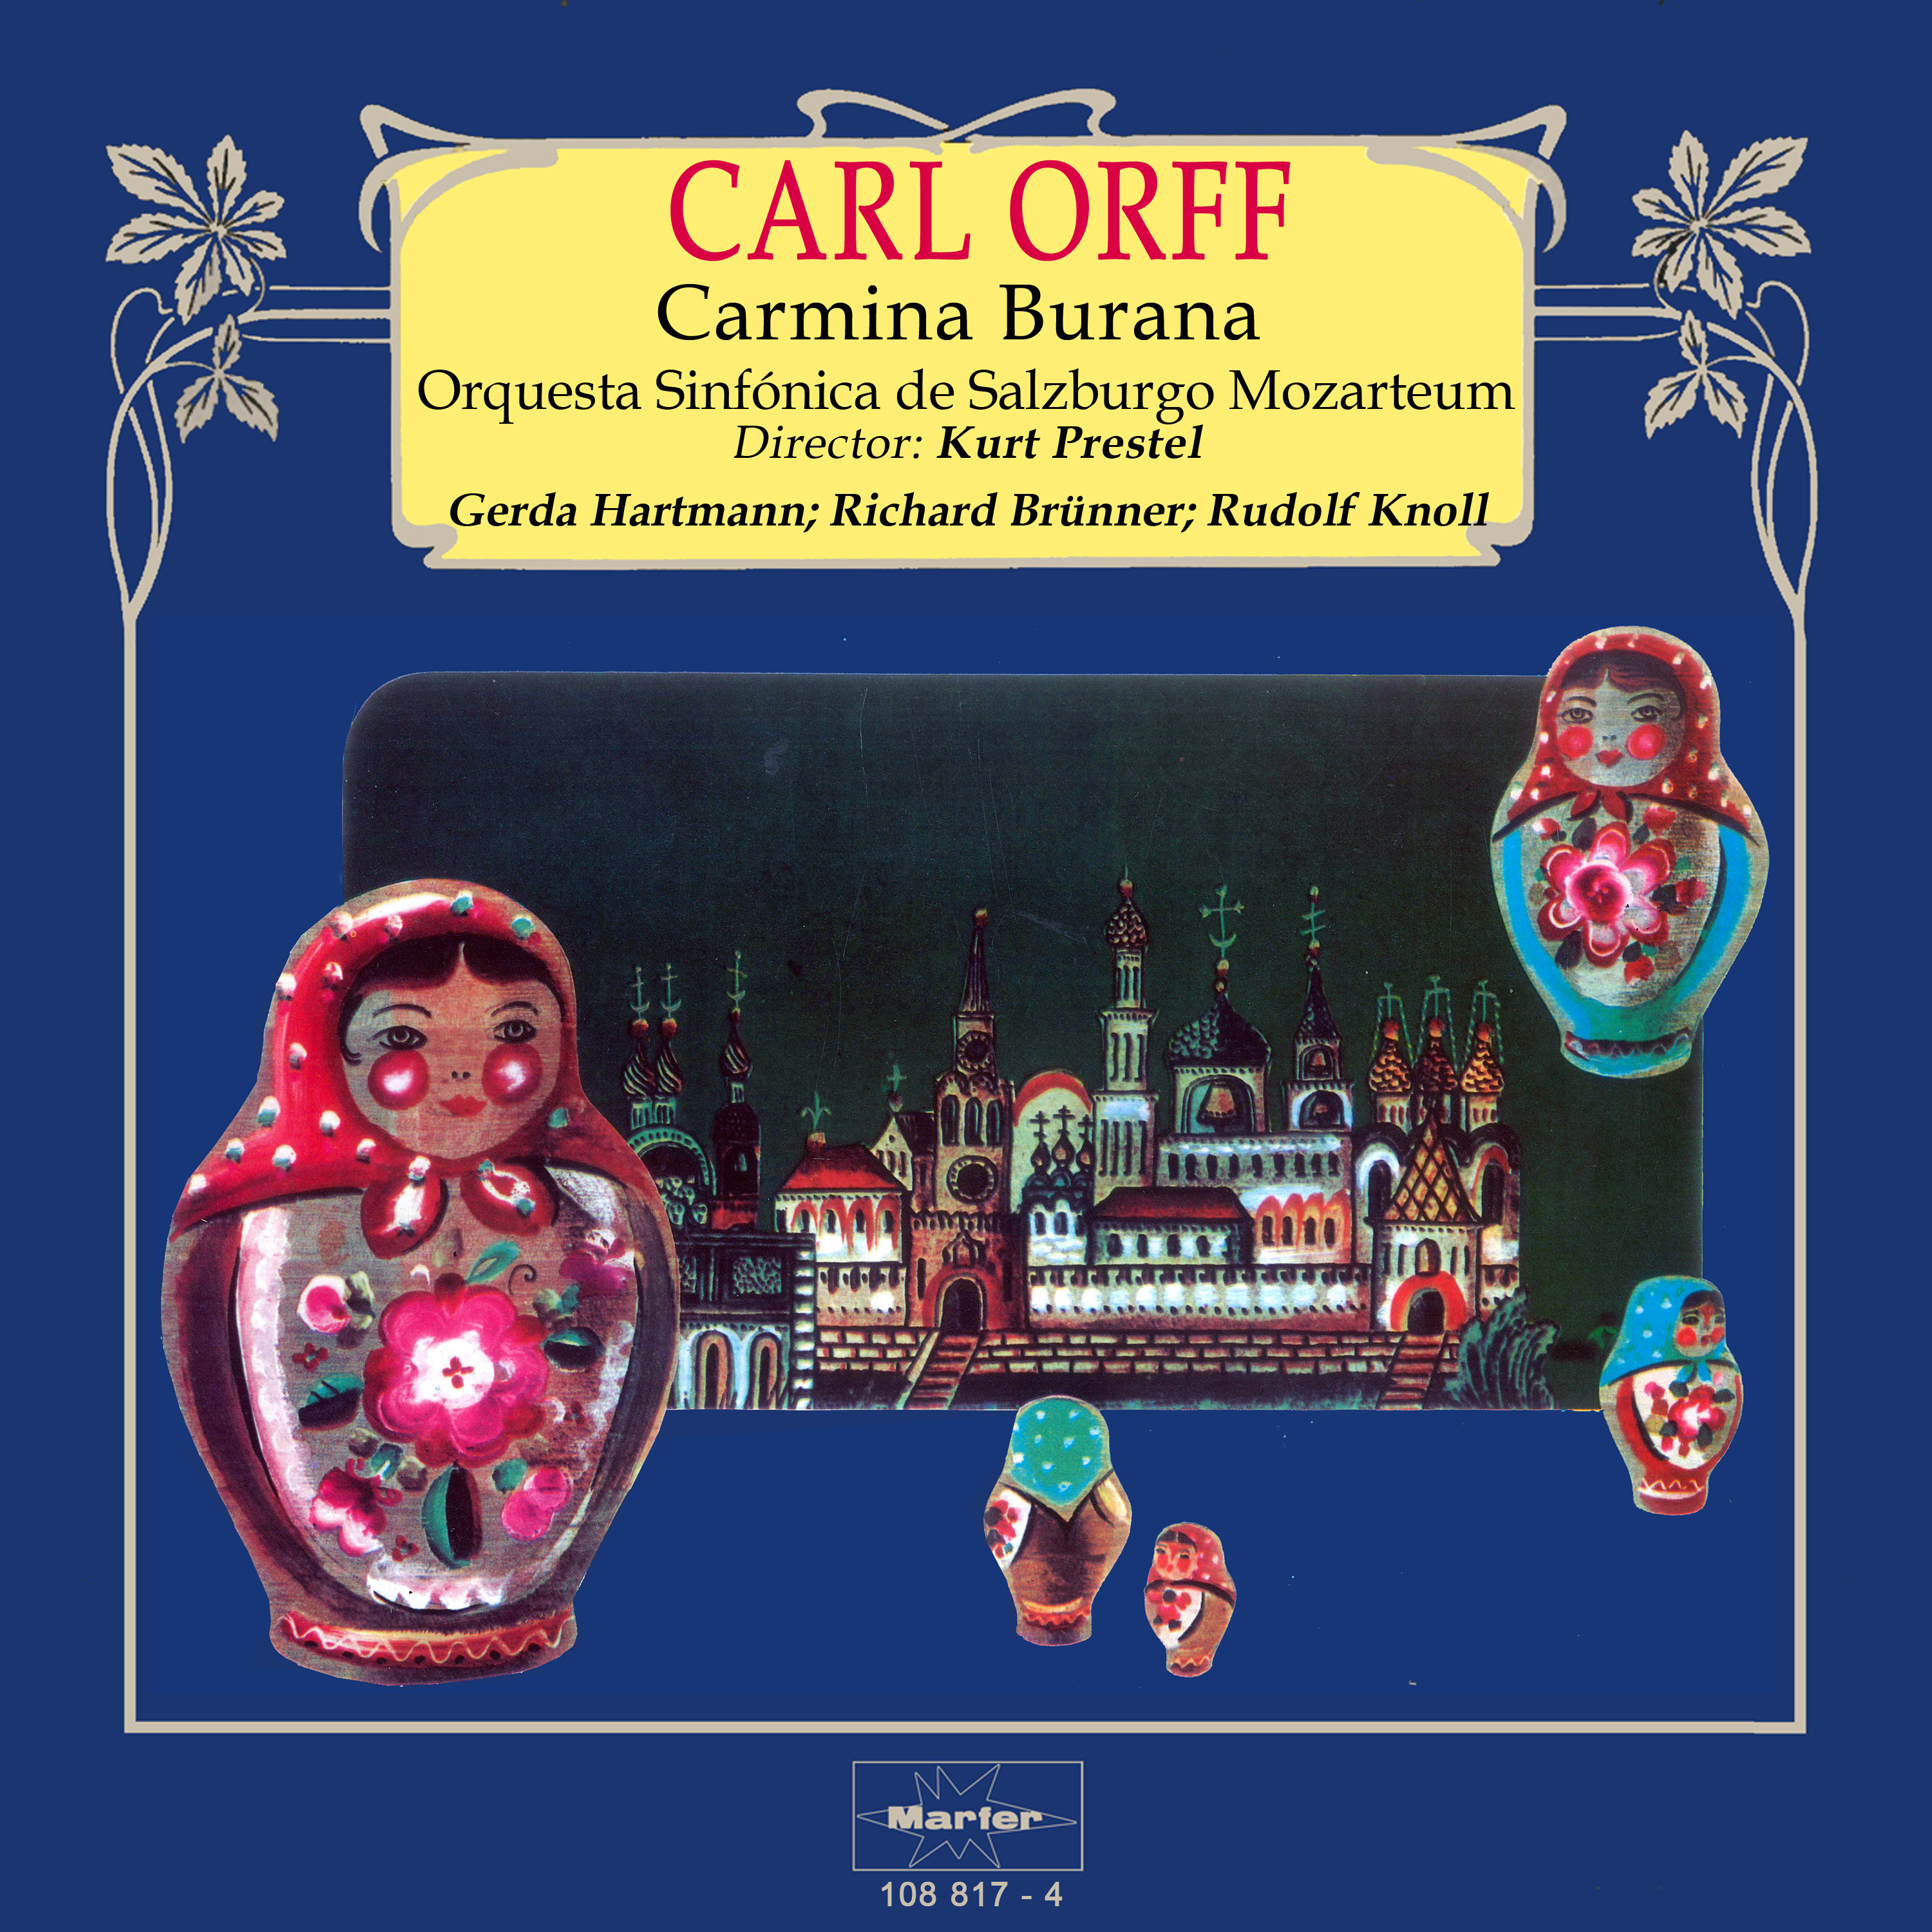 Carmina Burana para orquesta, coro, soprano, tenorio y bari tono, " La primavera": No. 3, Veris leta facies